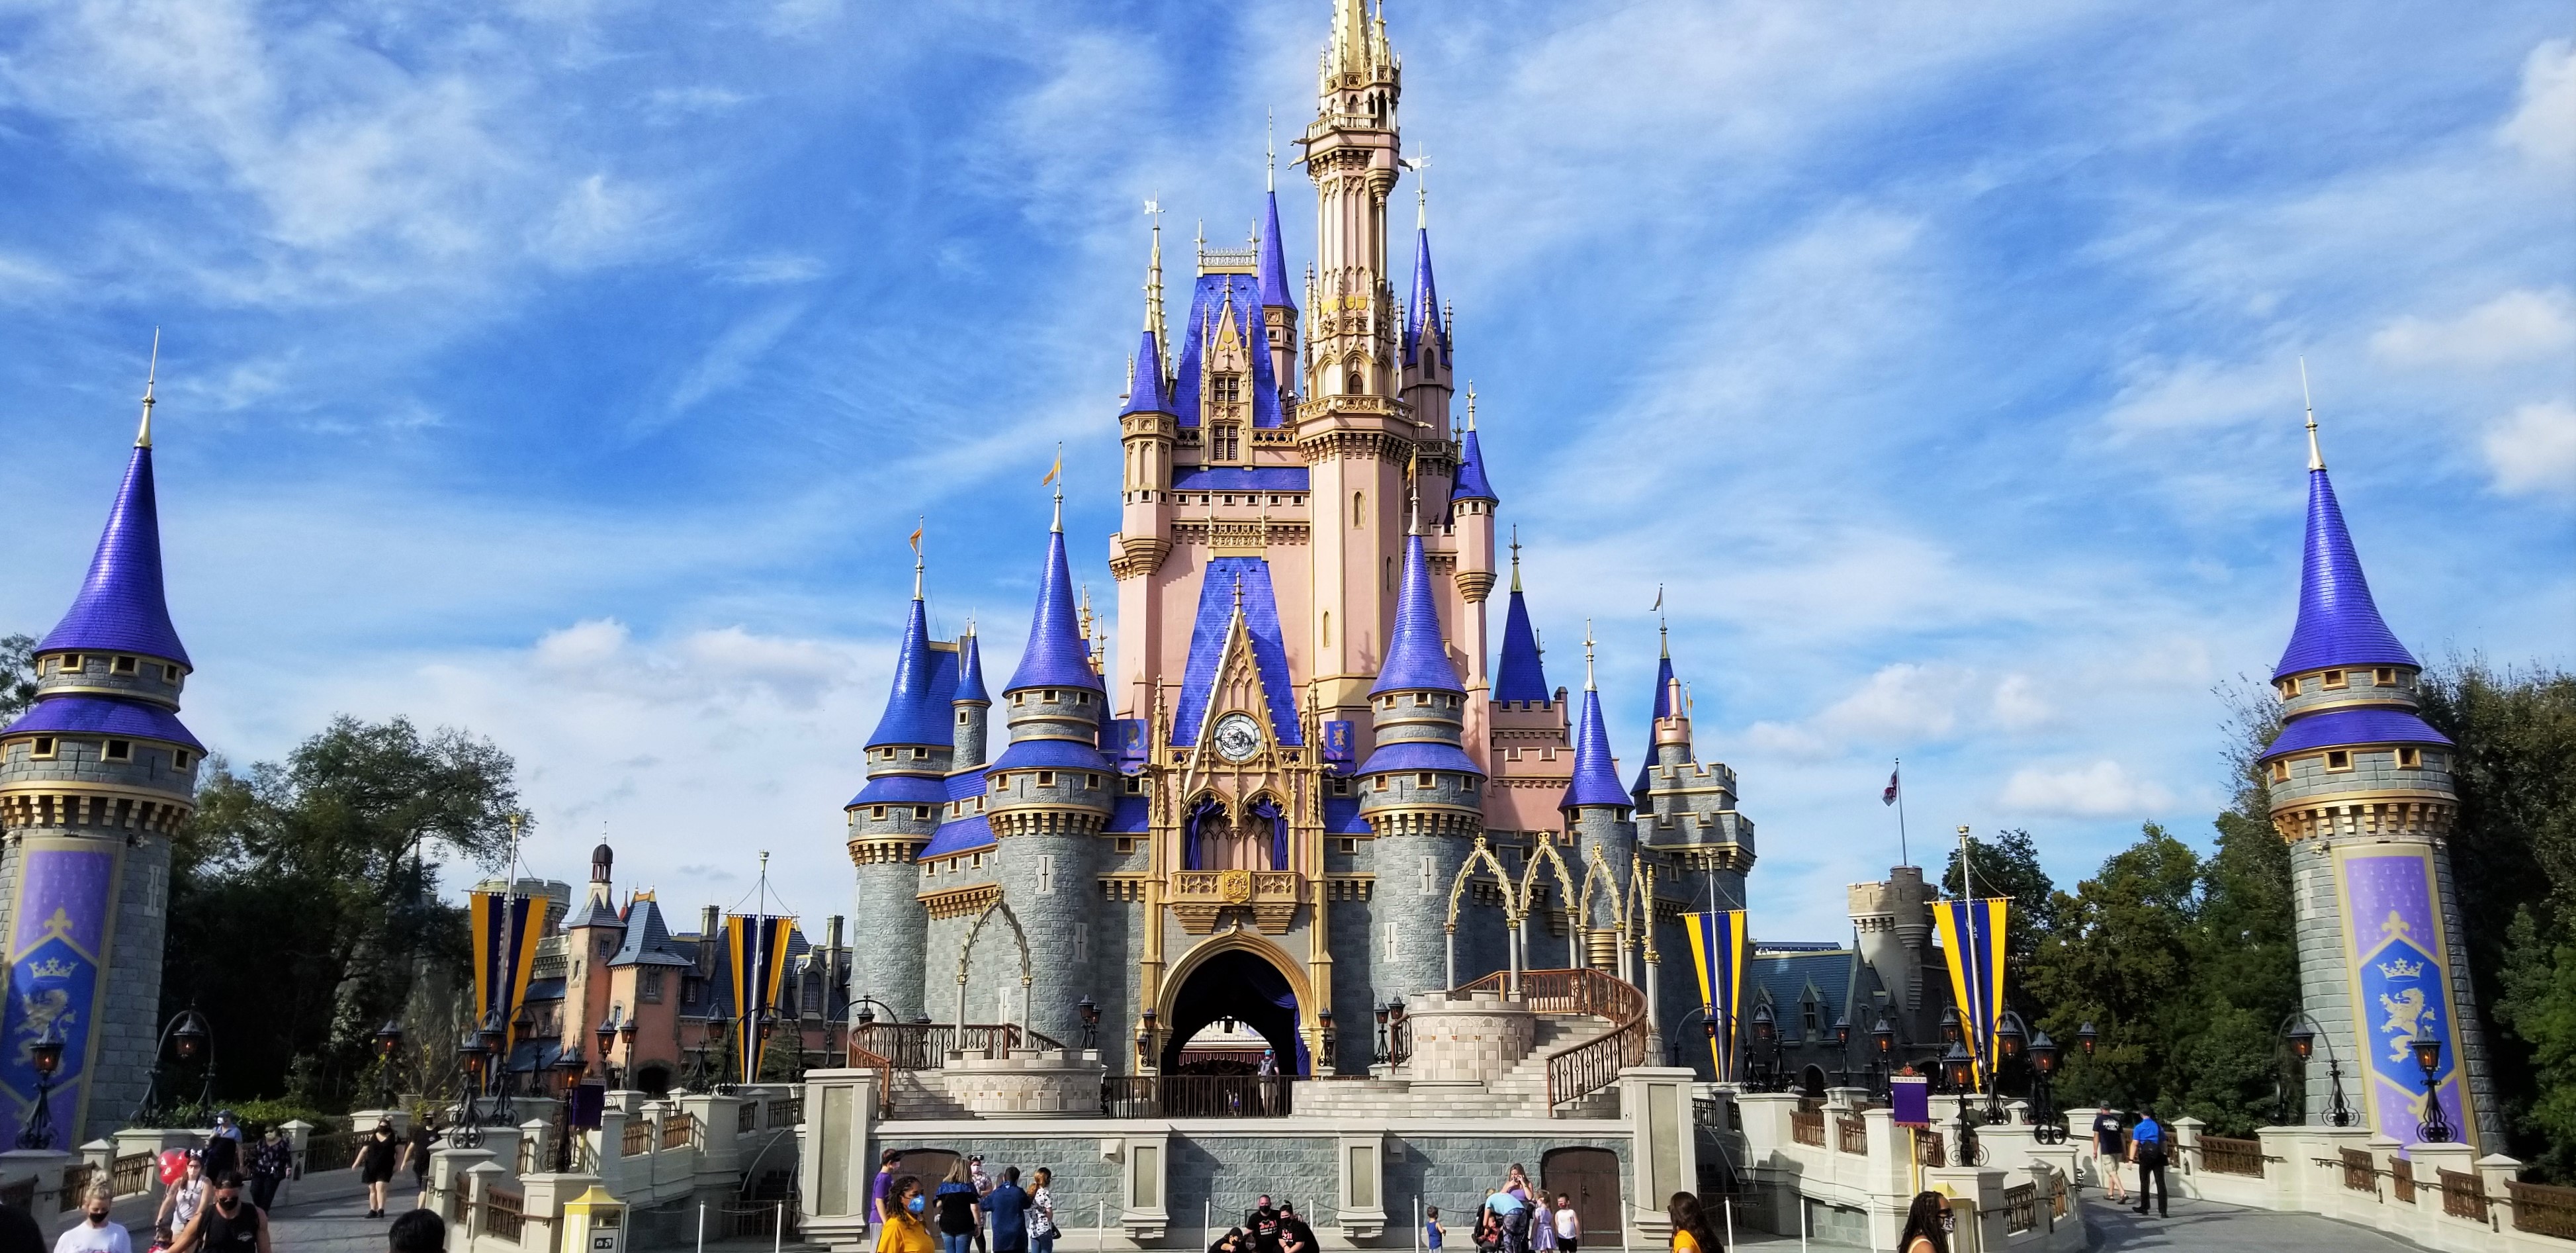 Cinderella Castle under blue skies